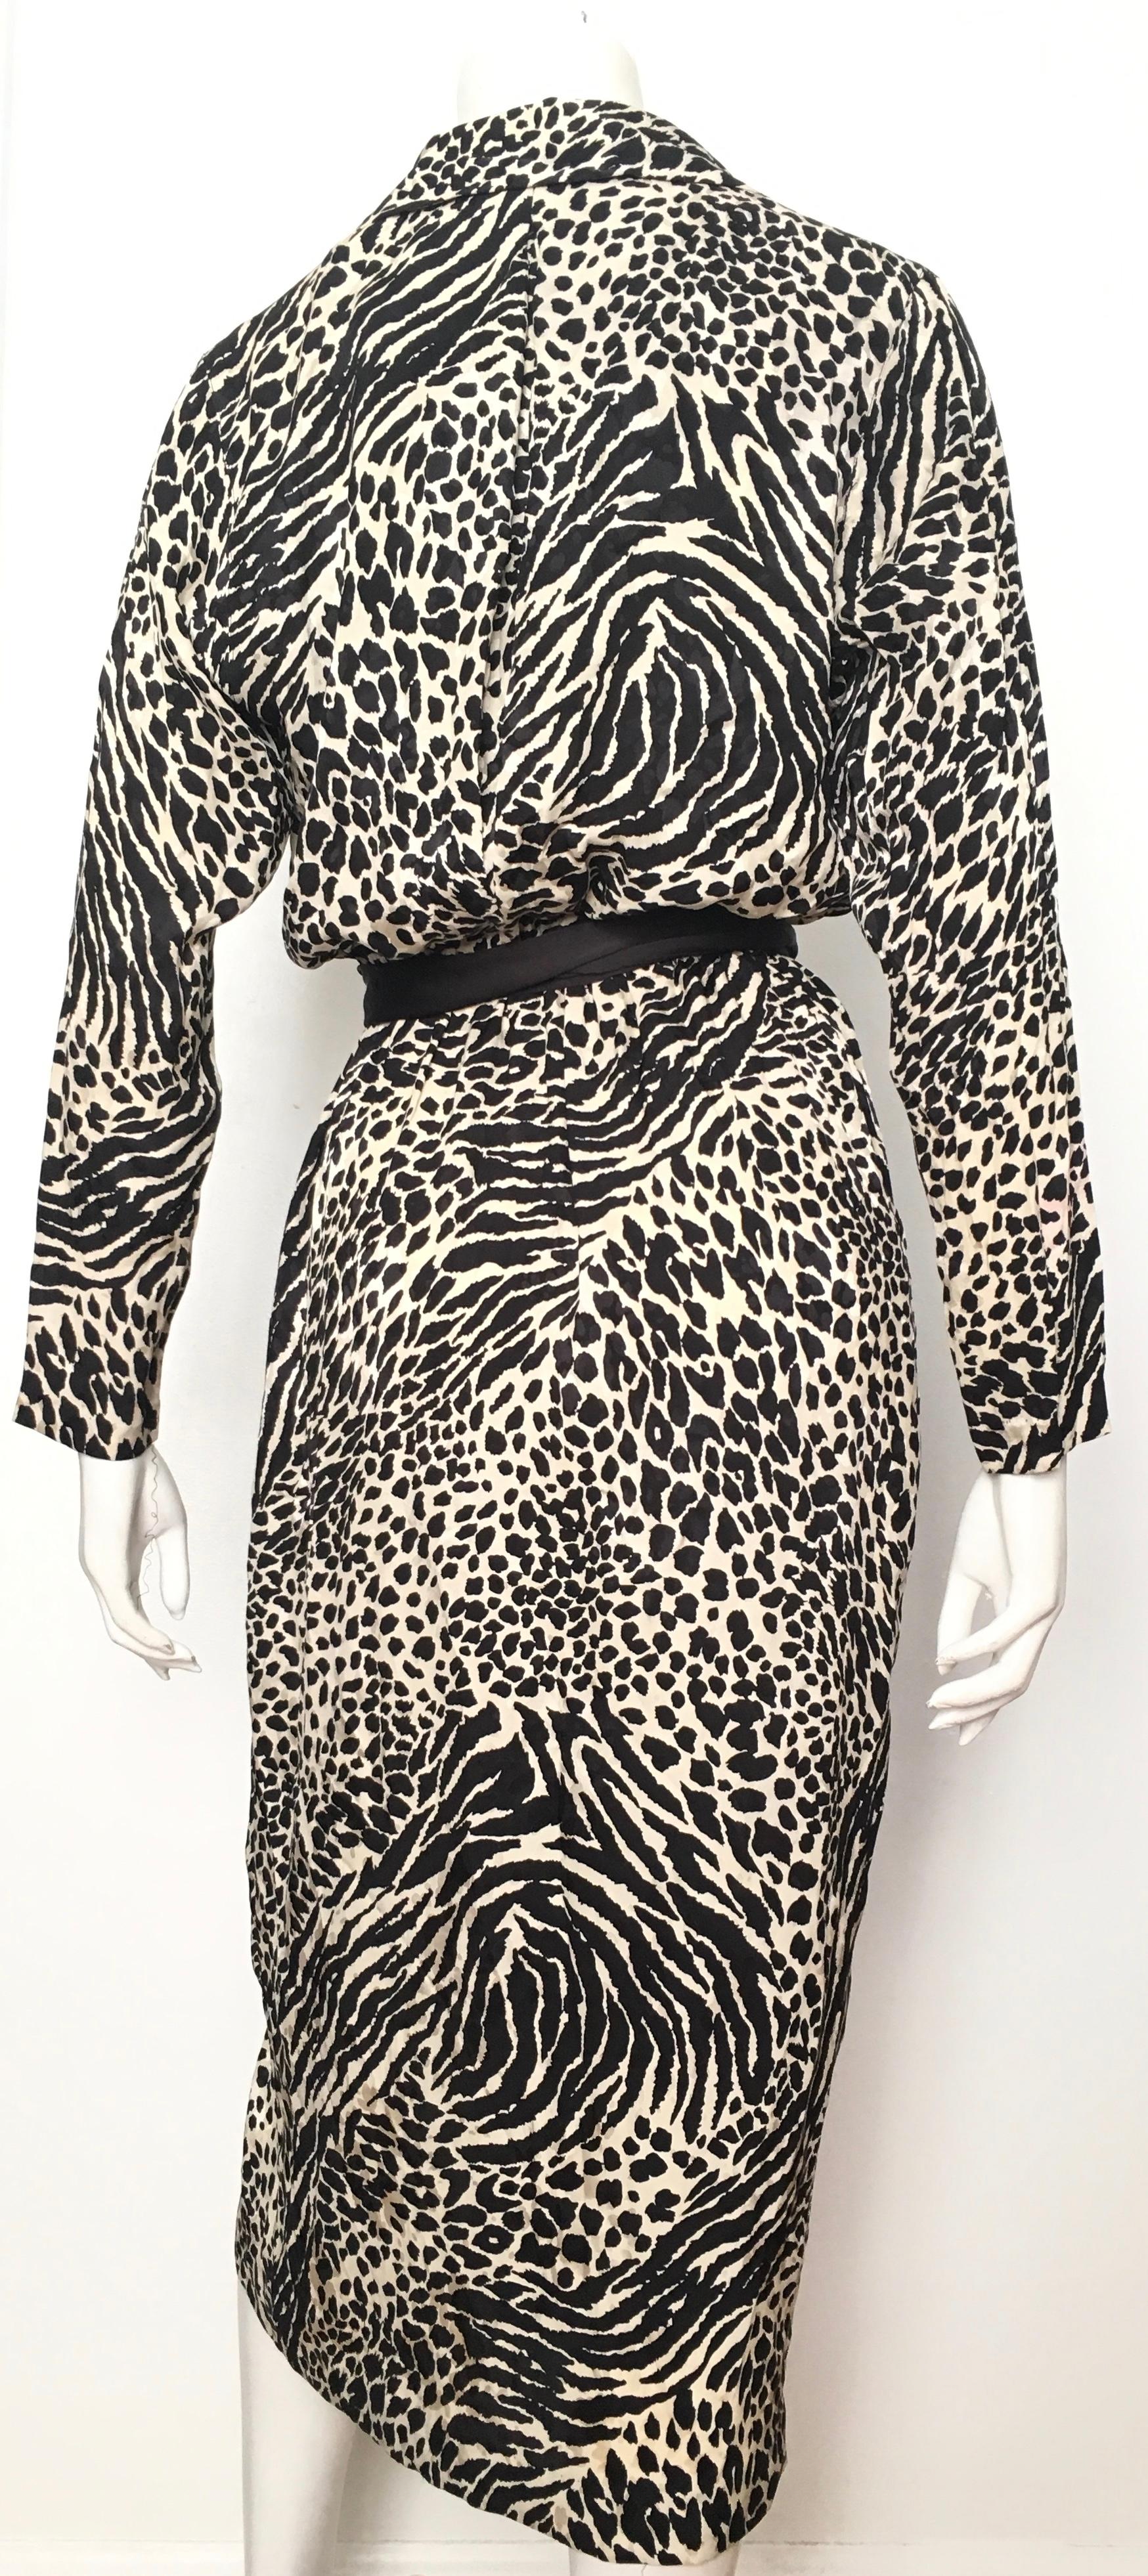 Geoffrey Beene for Lillie Rubin 1980 Animal Print Silk Dress Size 6. For Sale 1